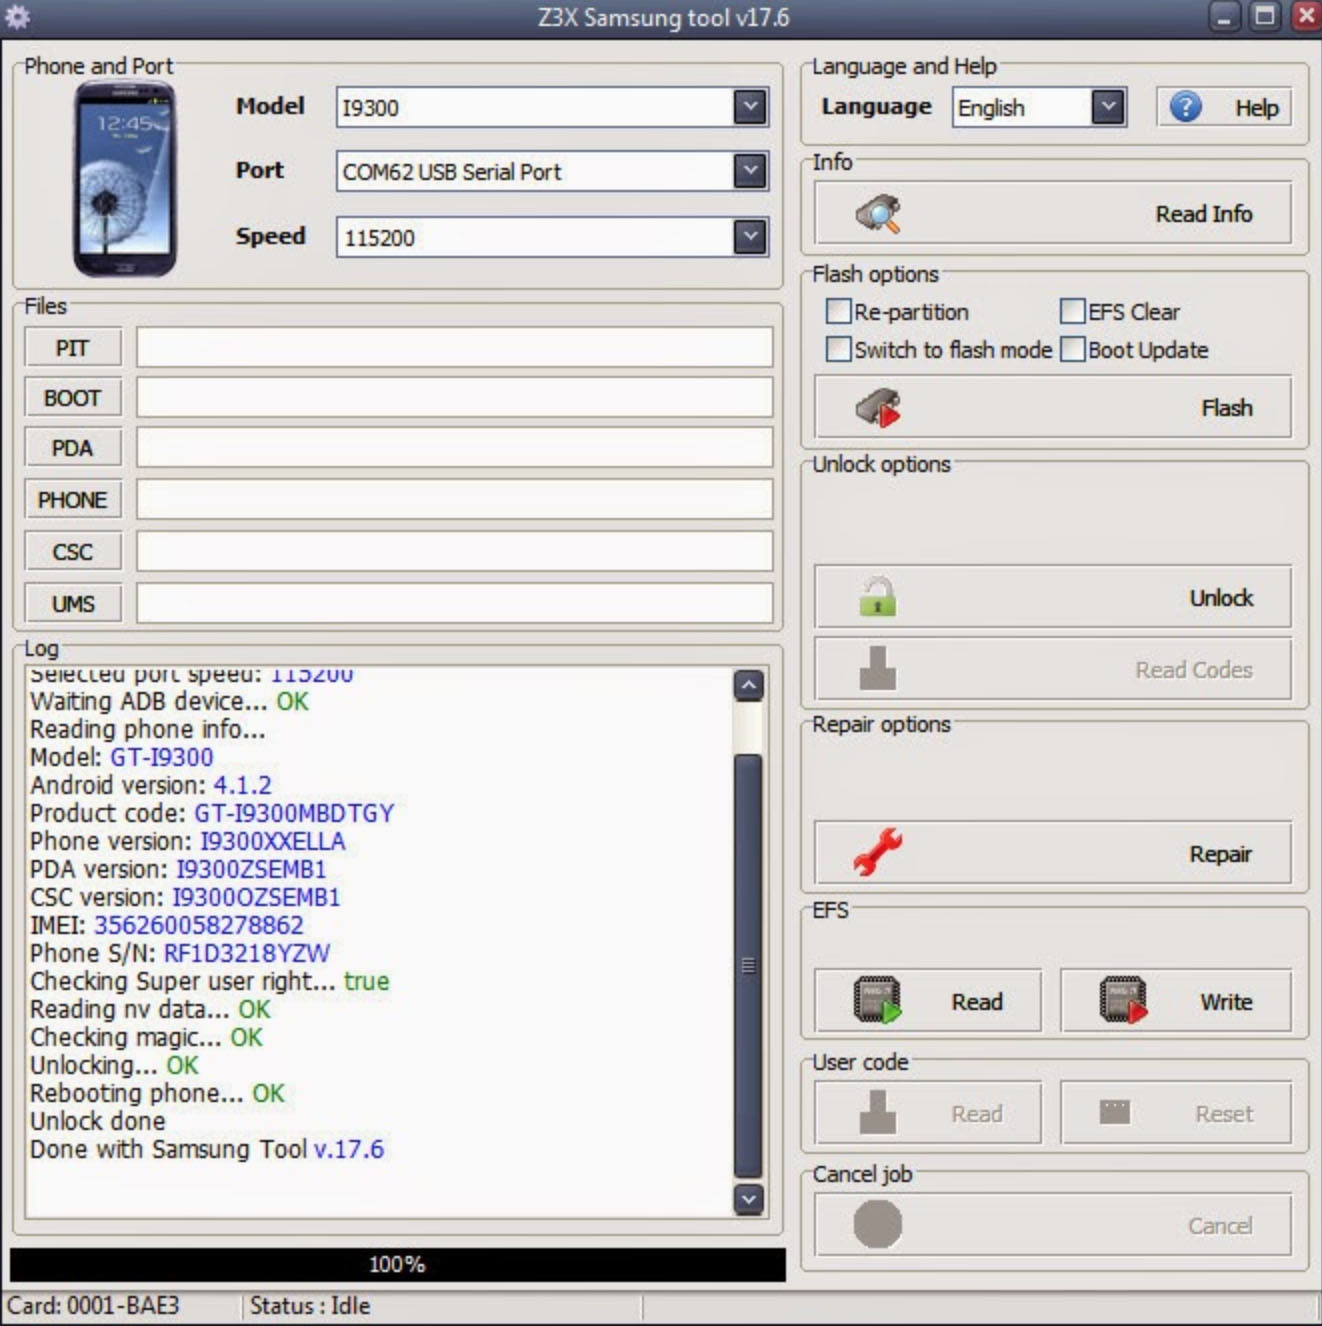 Free Samsung S4 Unlock Code Generator By Imei Number Renewfaces